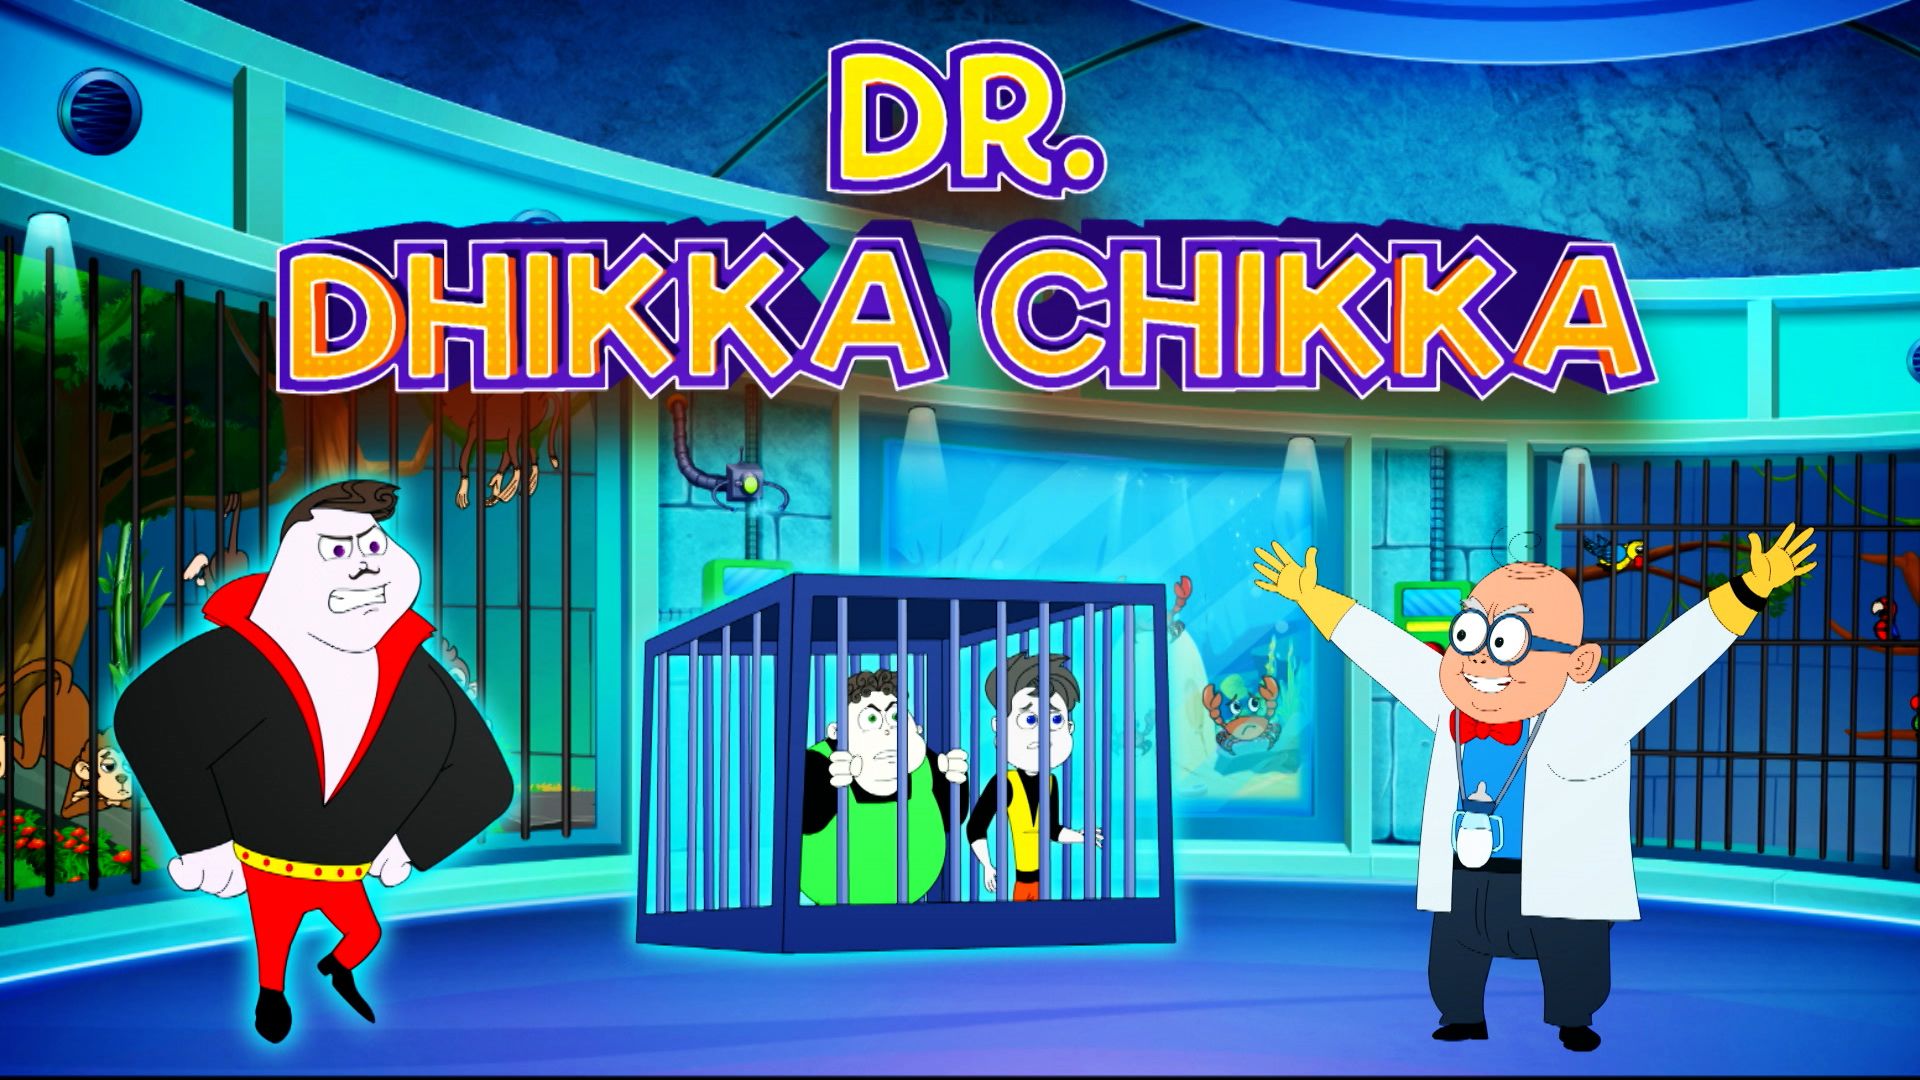 Dr. Dhikka Chikka